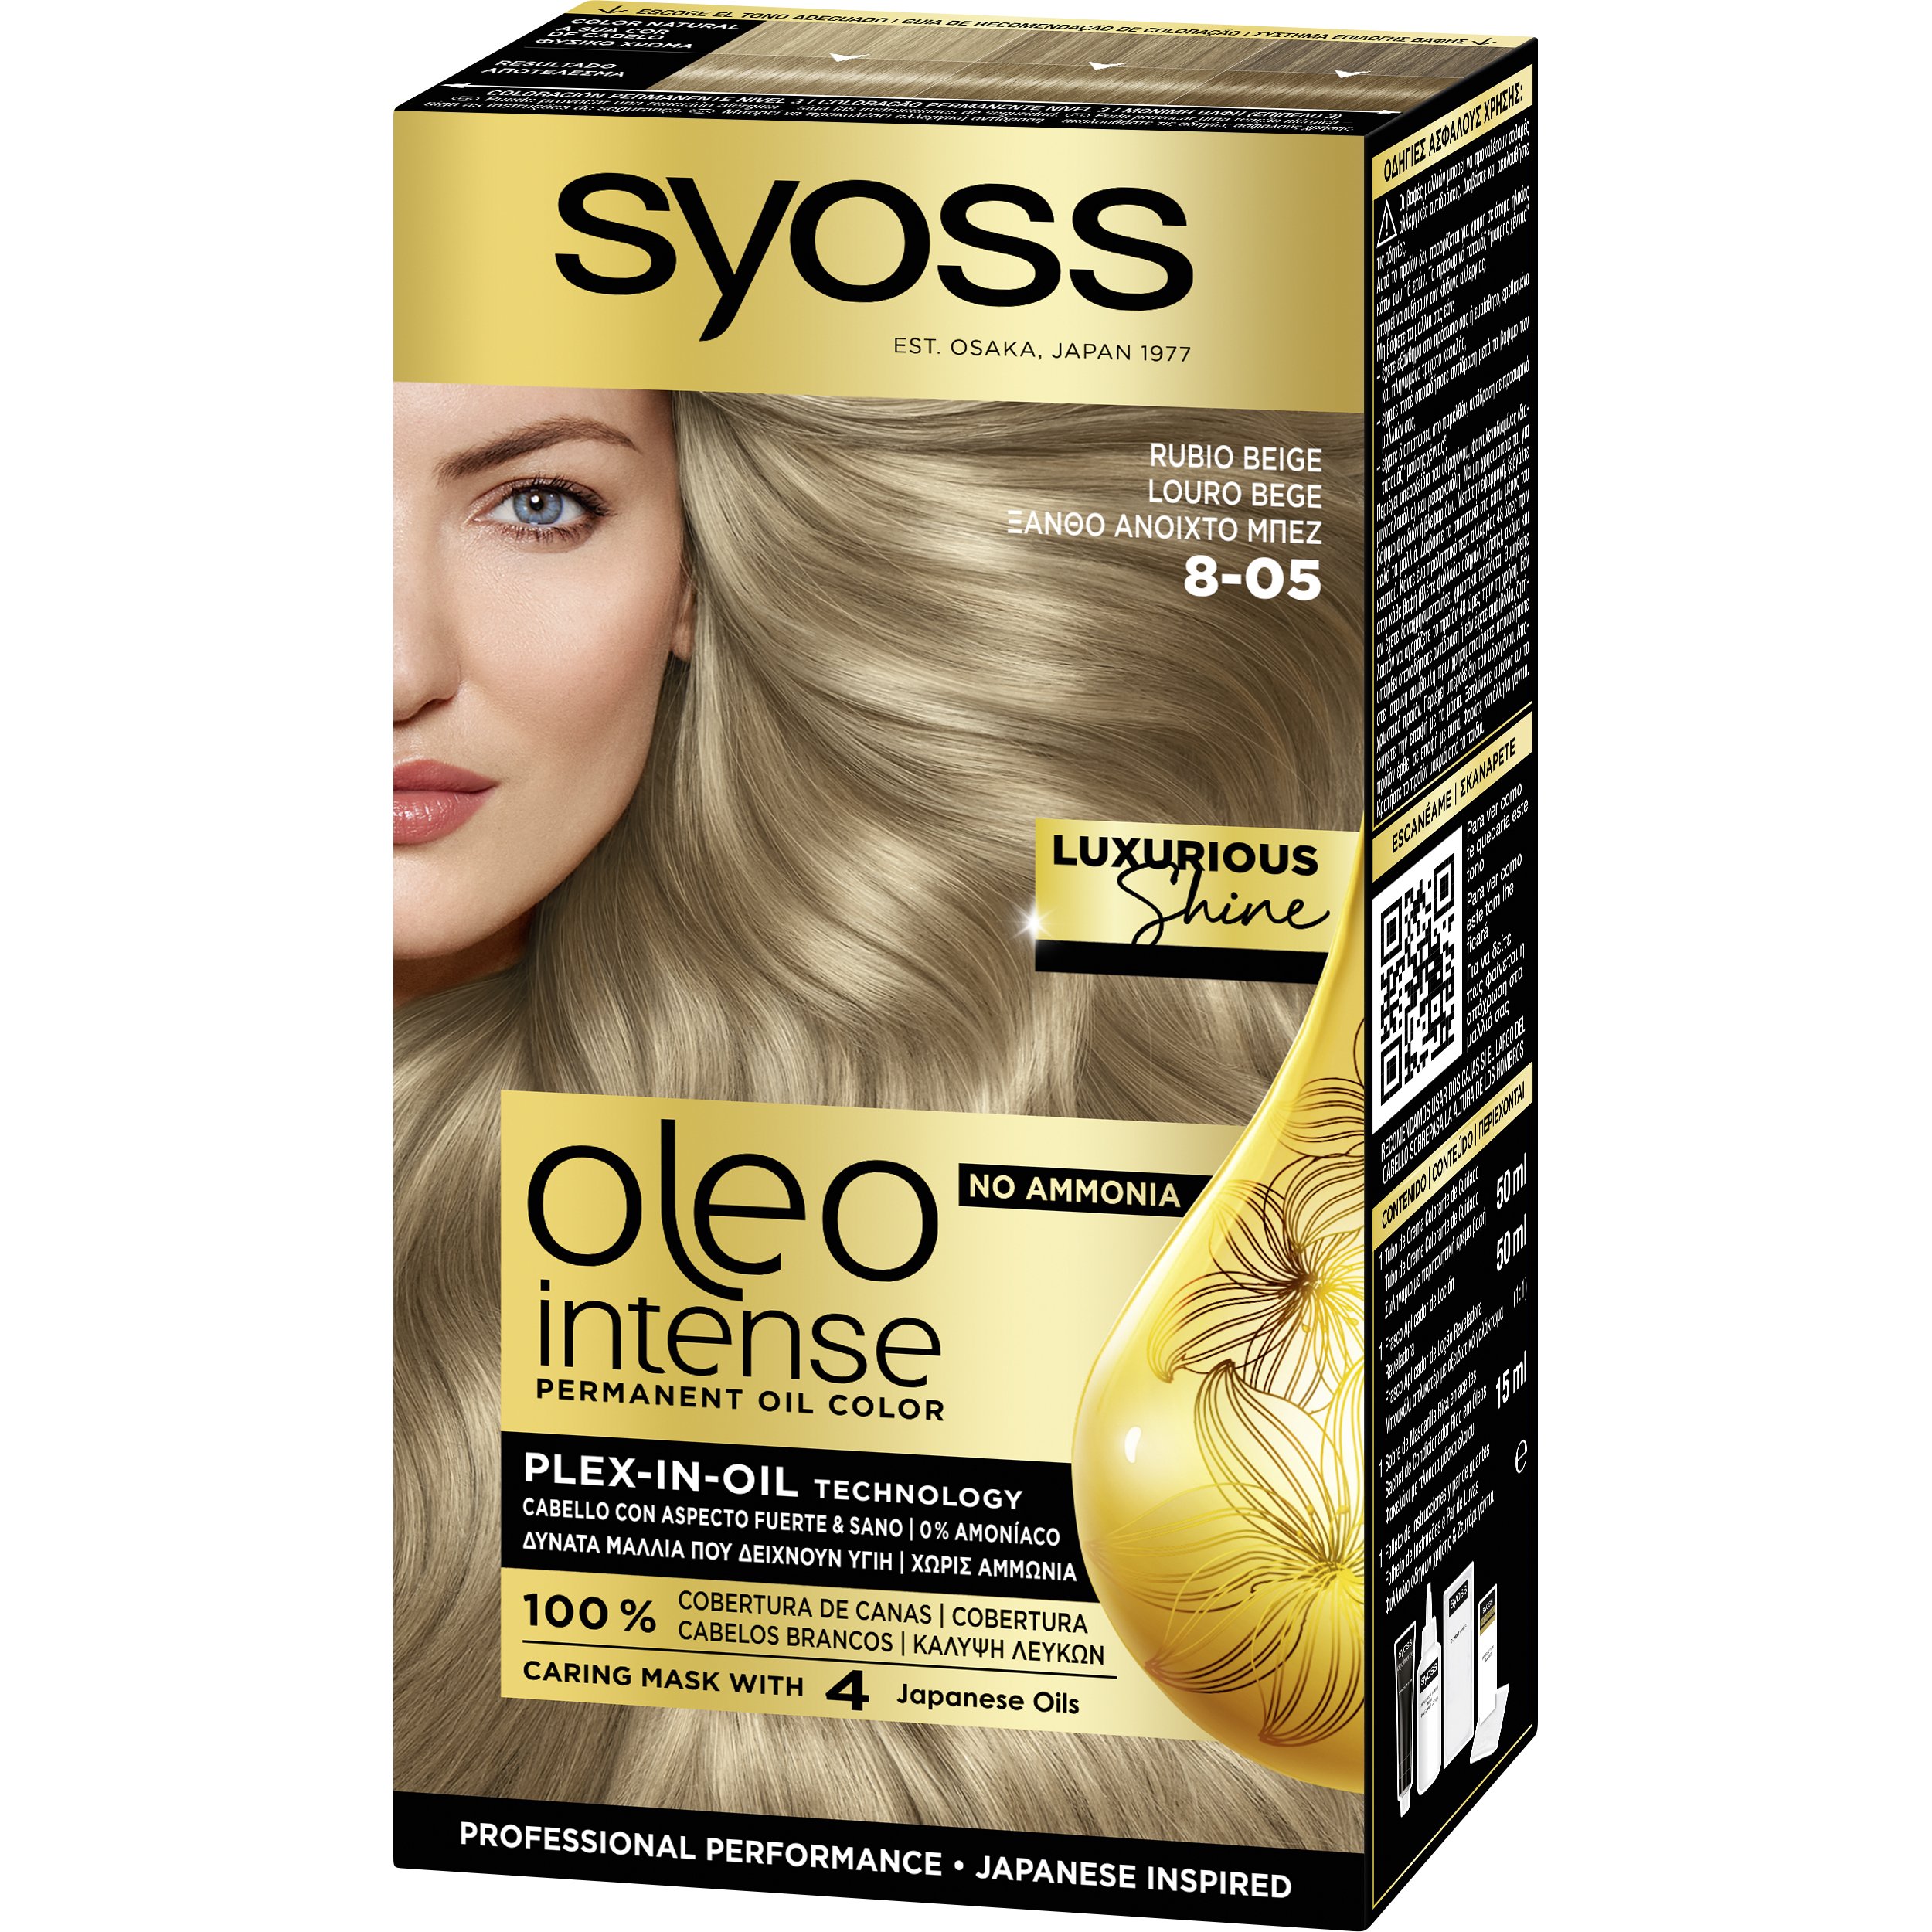 Syoss Oleo Intense Permanent Oil Hair Color Kit Επαγγελματική Μόνιμη Βαφή Μαλλιών για Εξαιρετική Κάλυψη & Έντονο Χρώμα που Διαρκεί, Χωρίς Αμμωνία 1 Τεμάχιο – 8-05 Ξανθό Ανοιχτό Μπεζ